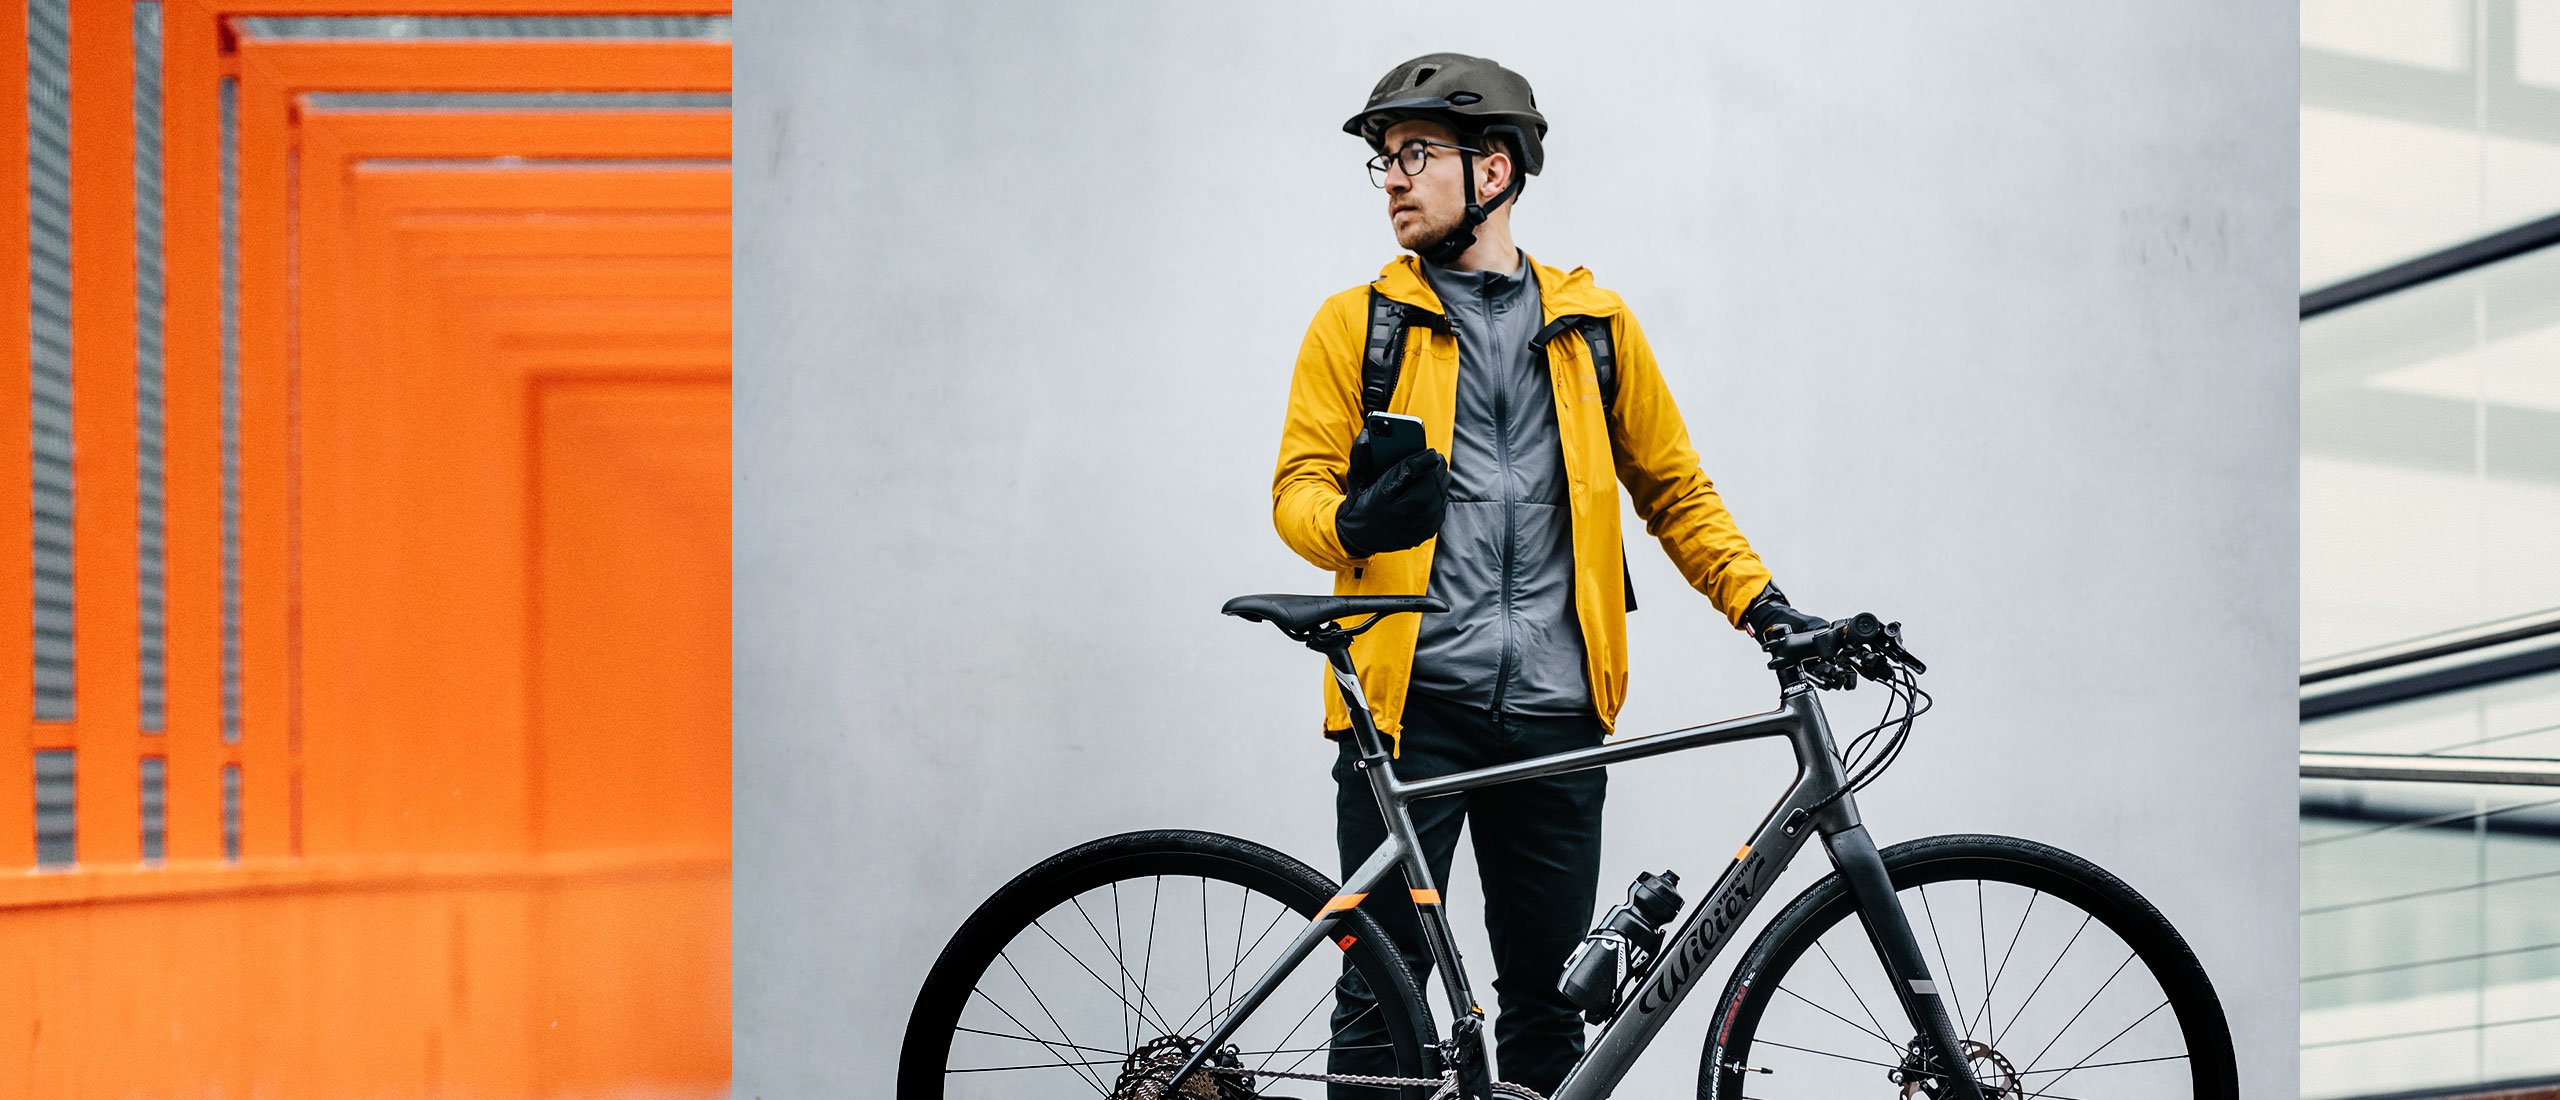 MET Mobilite Mips Urban, E-Bike and Commuting Helmet